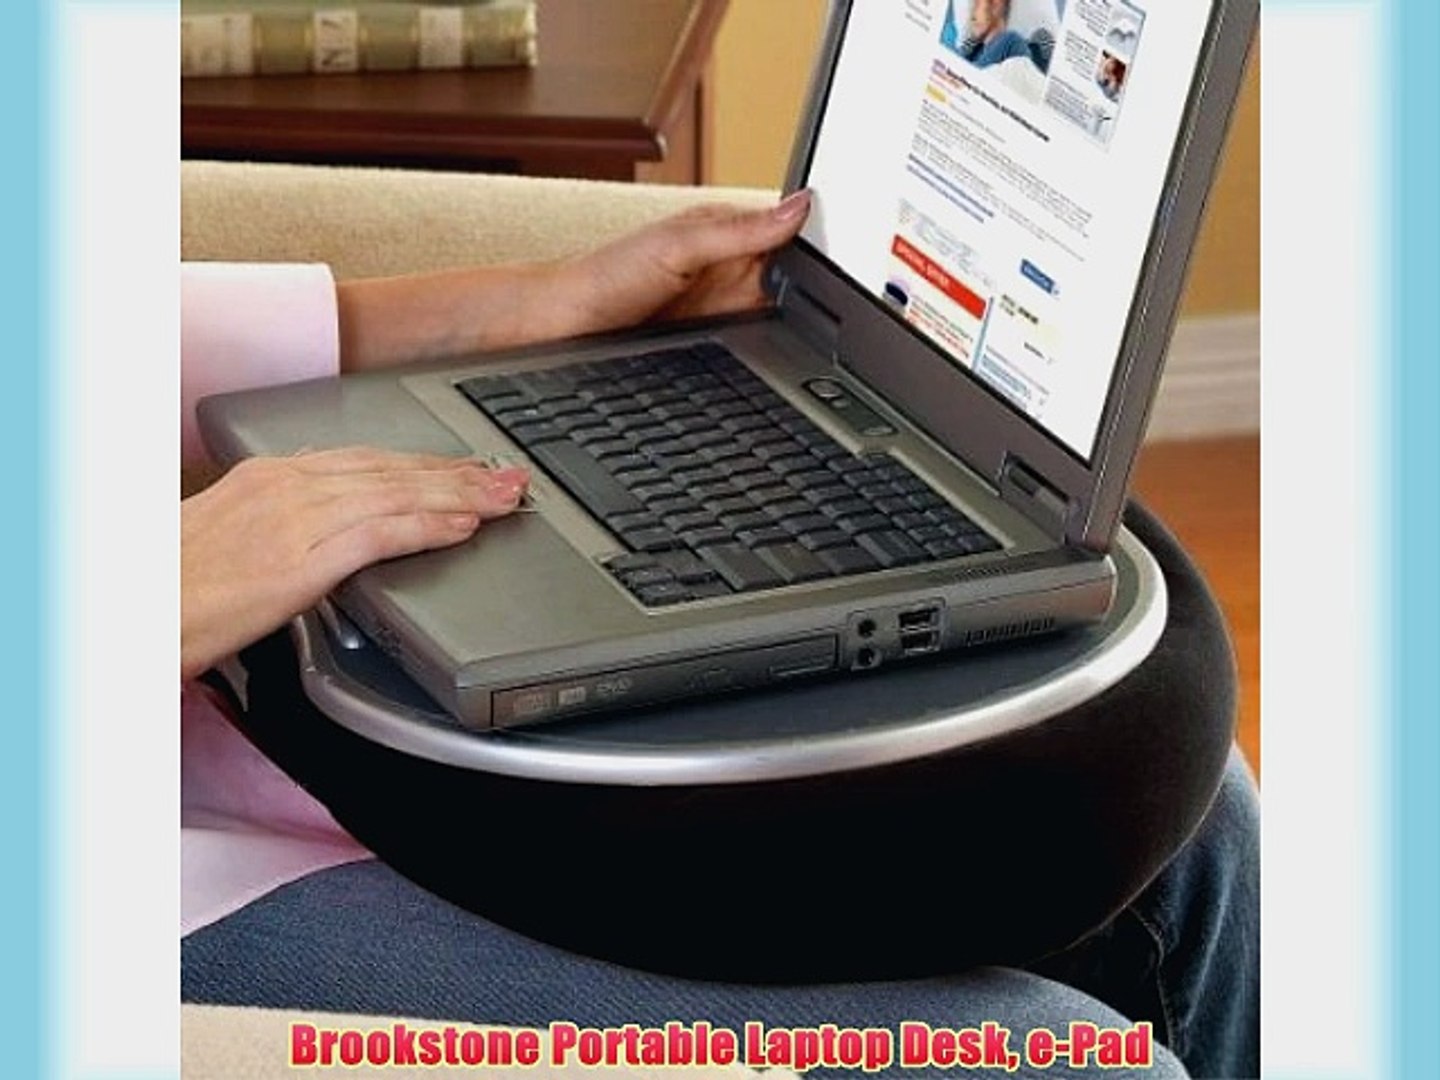 Brookstone Portable Laptop Desk E Pad Video Dailymotion